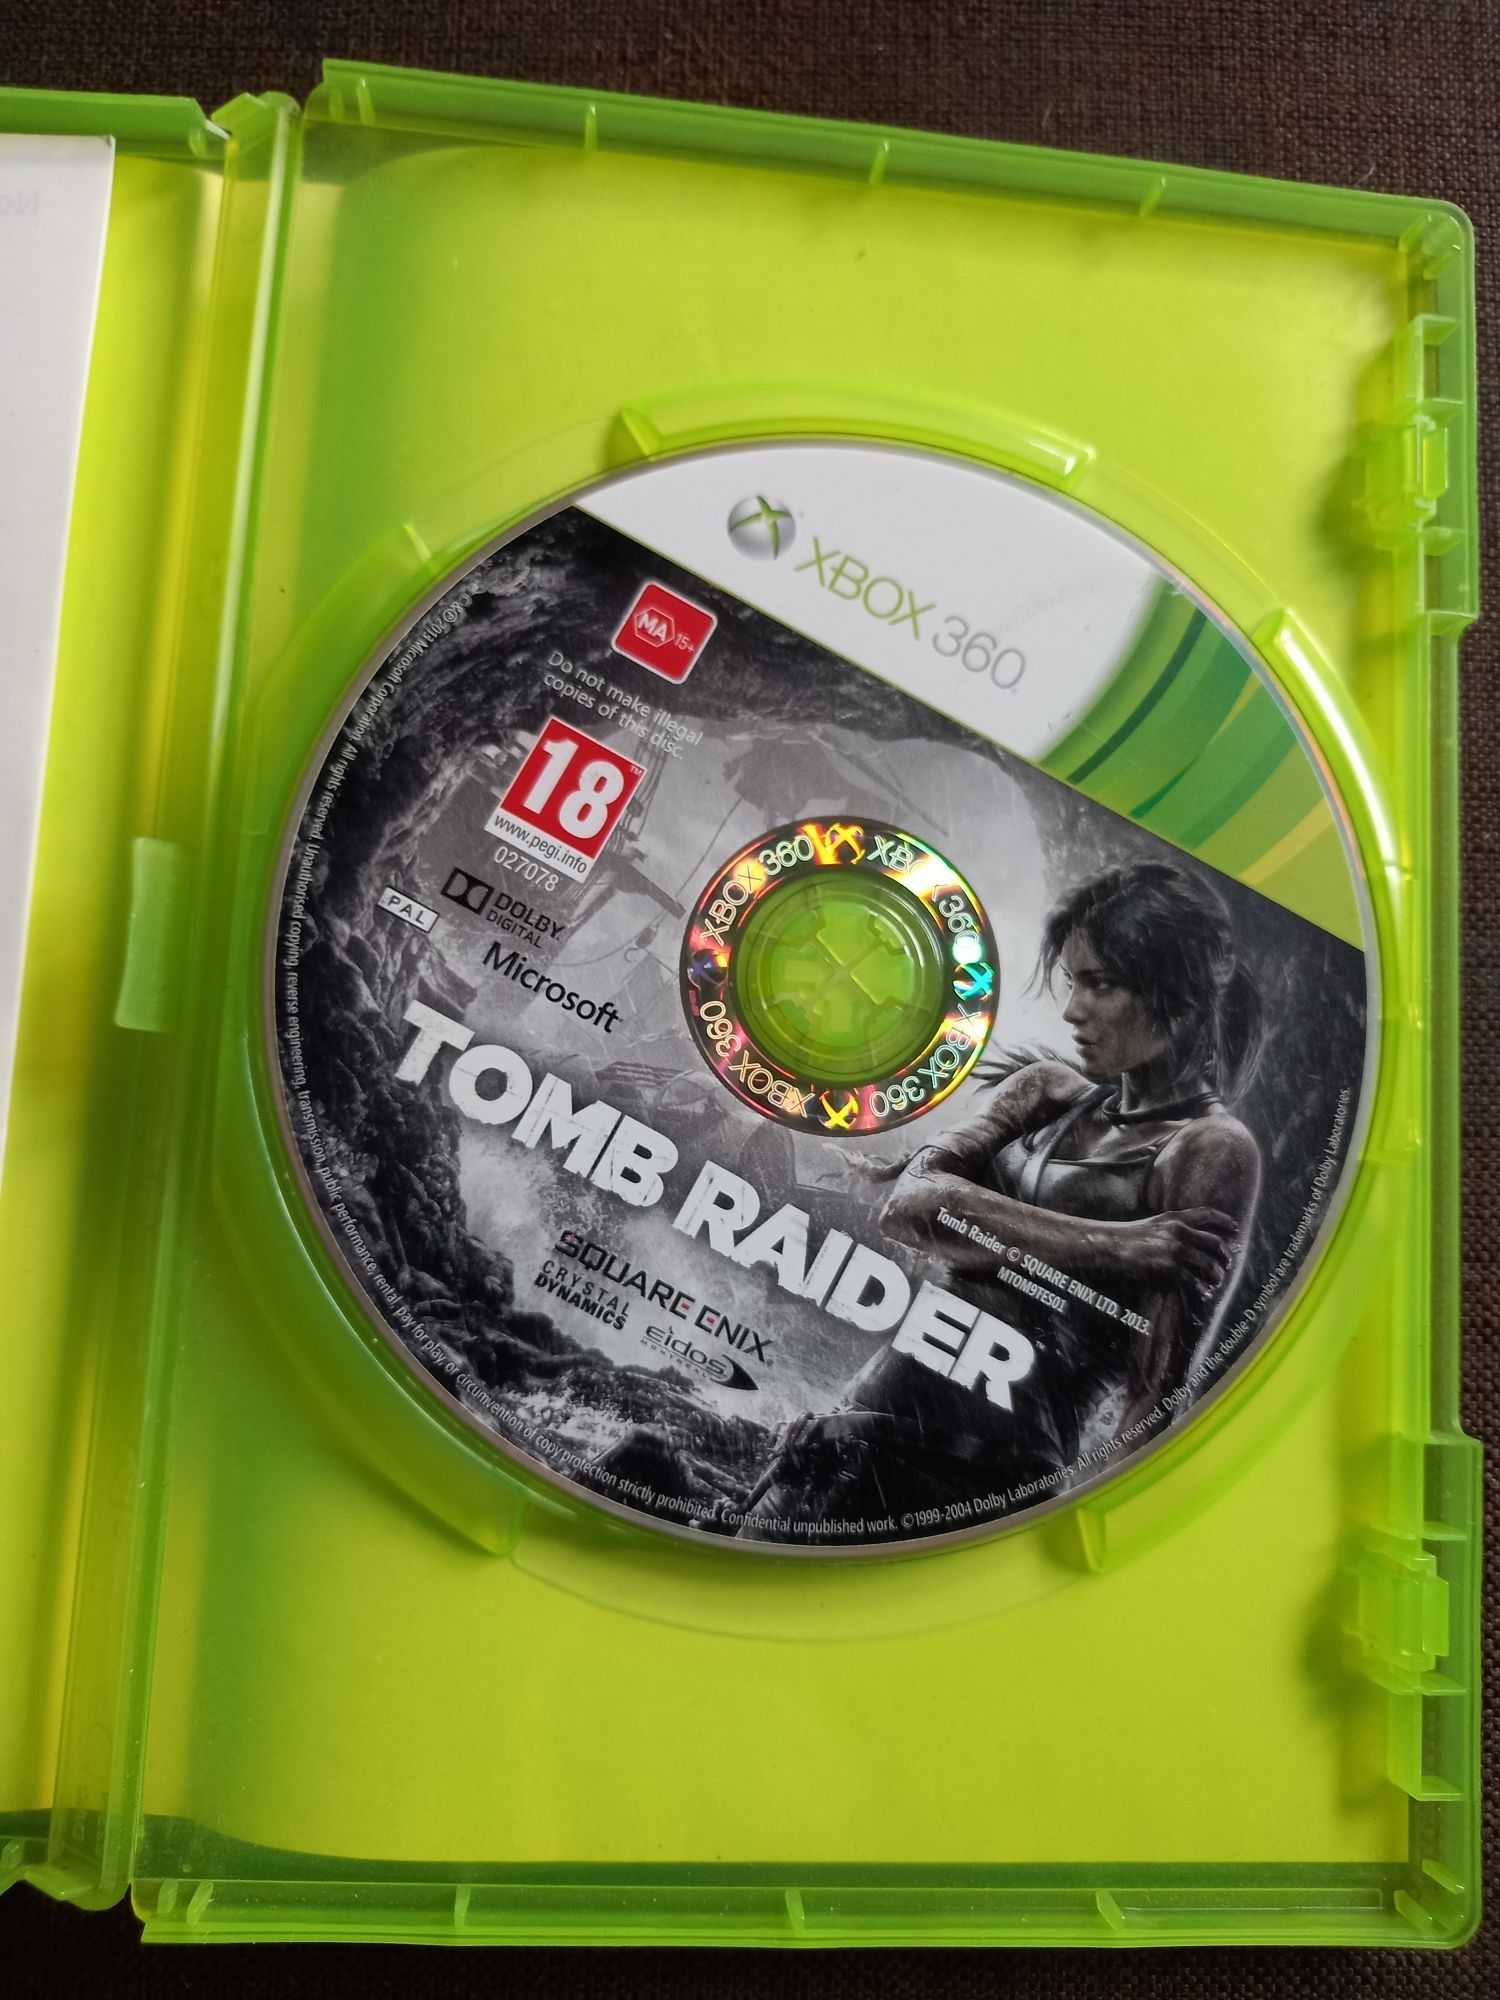 Gra Tomb Raider na konsolę xbox 360